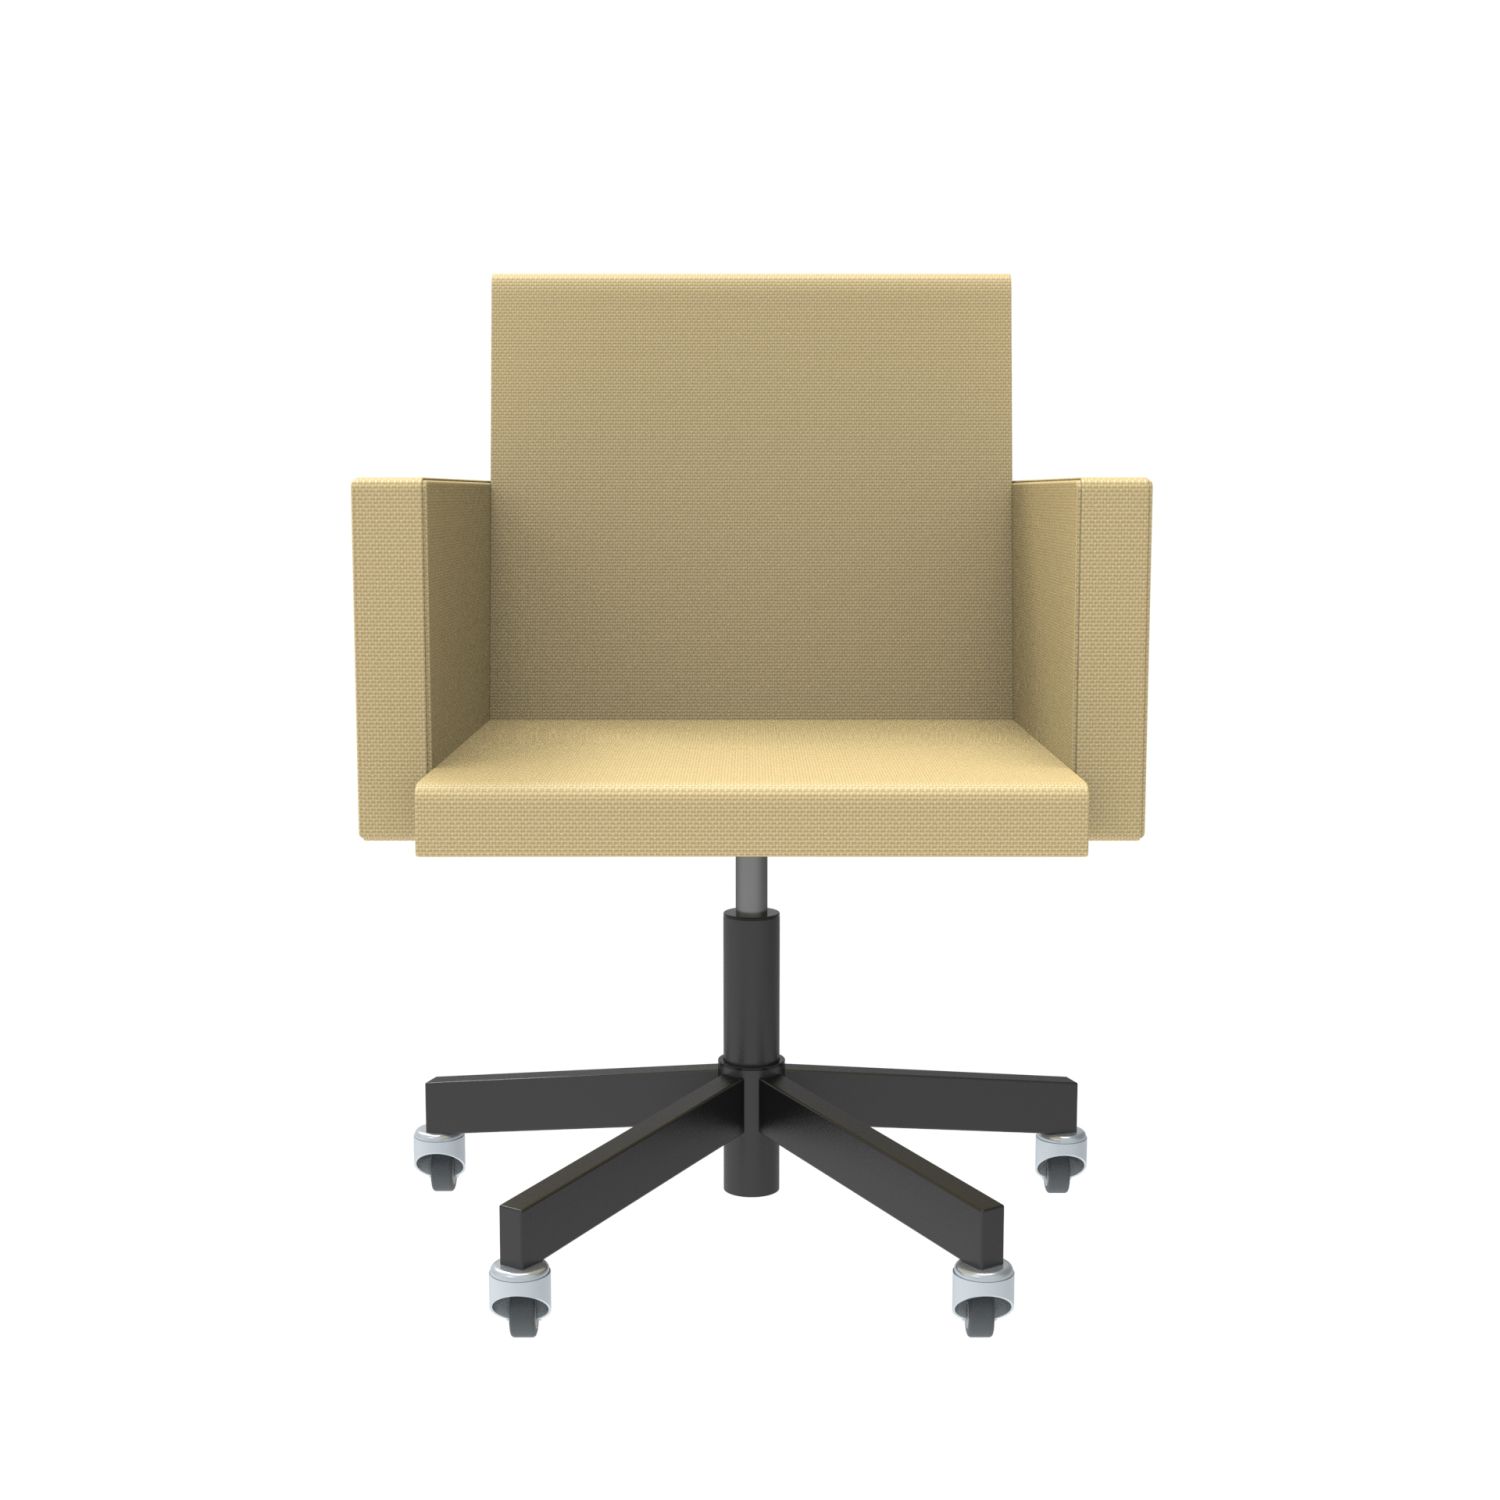 lensvelt atelier van lieshout office chair with armrests light brown 141 black ral9005 soft rolls